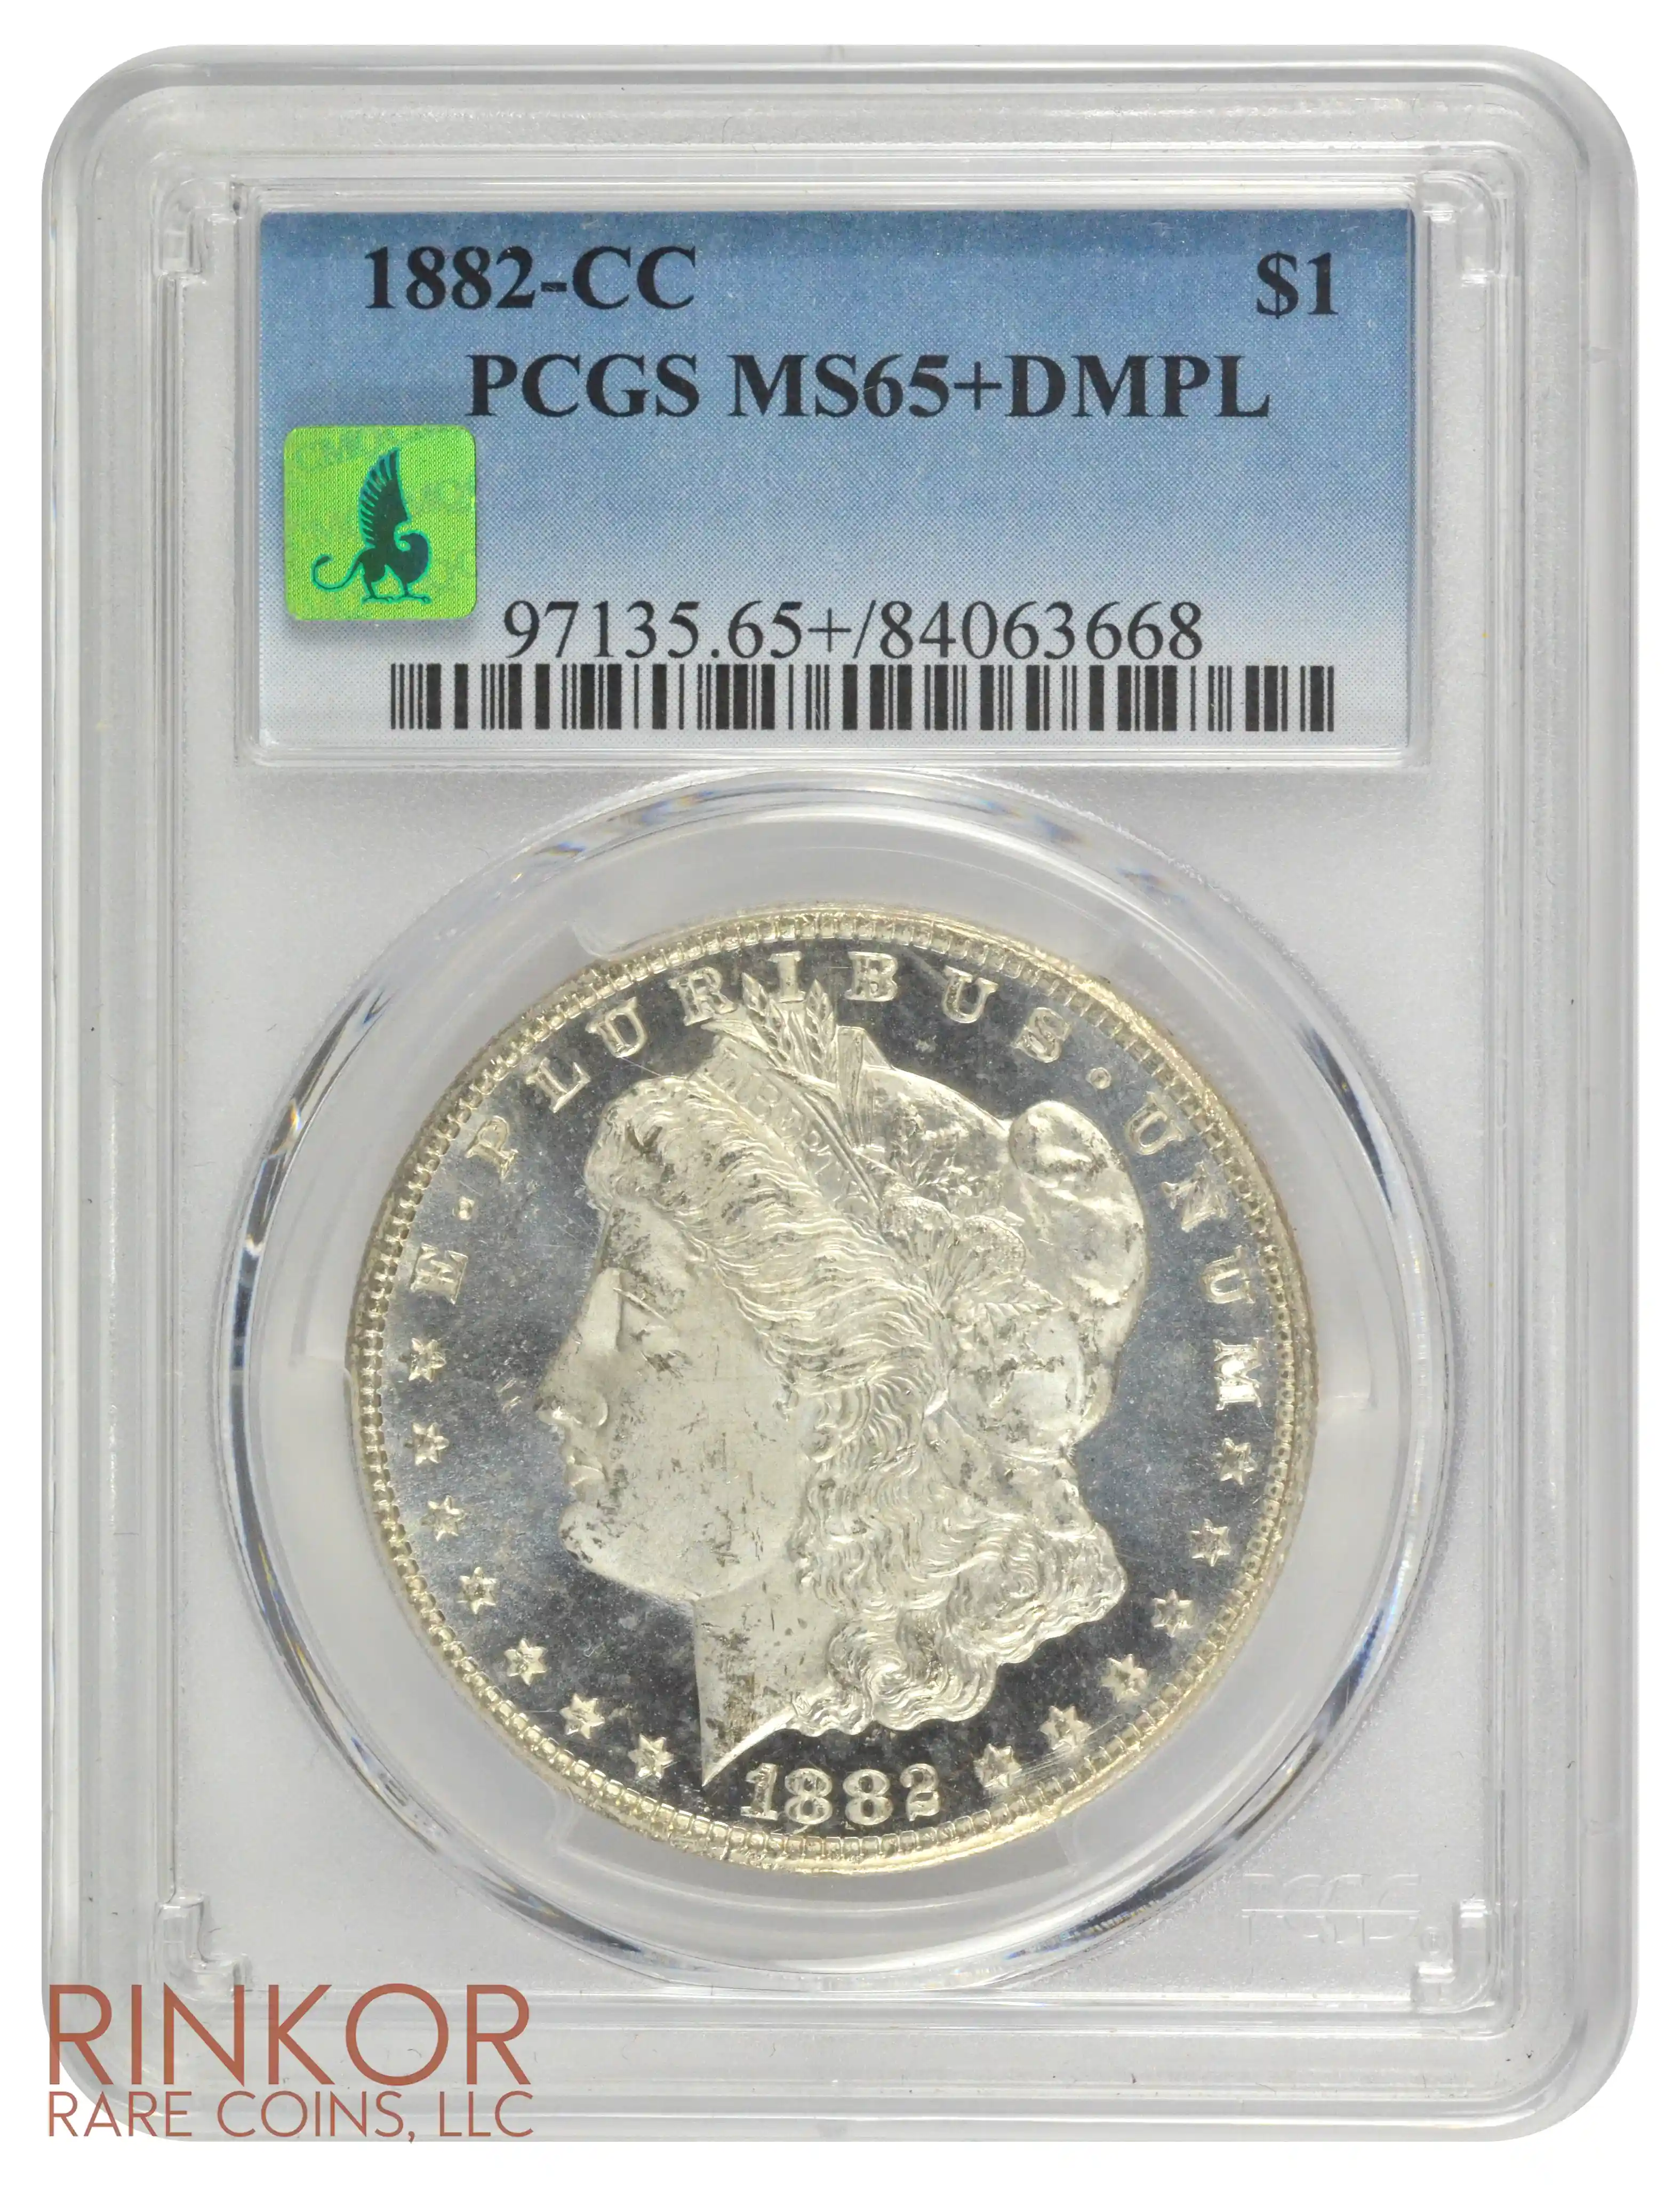 1882-CC $1 PCGS MS 65+ DMPL CMQ